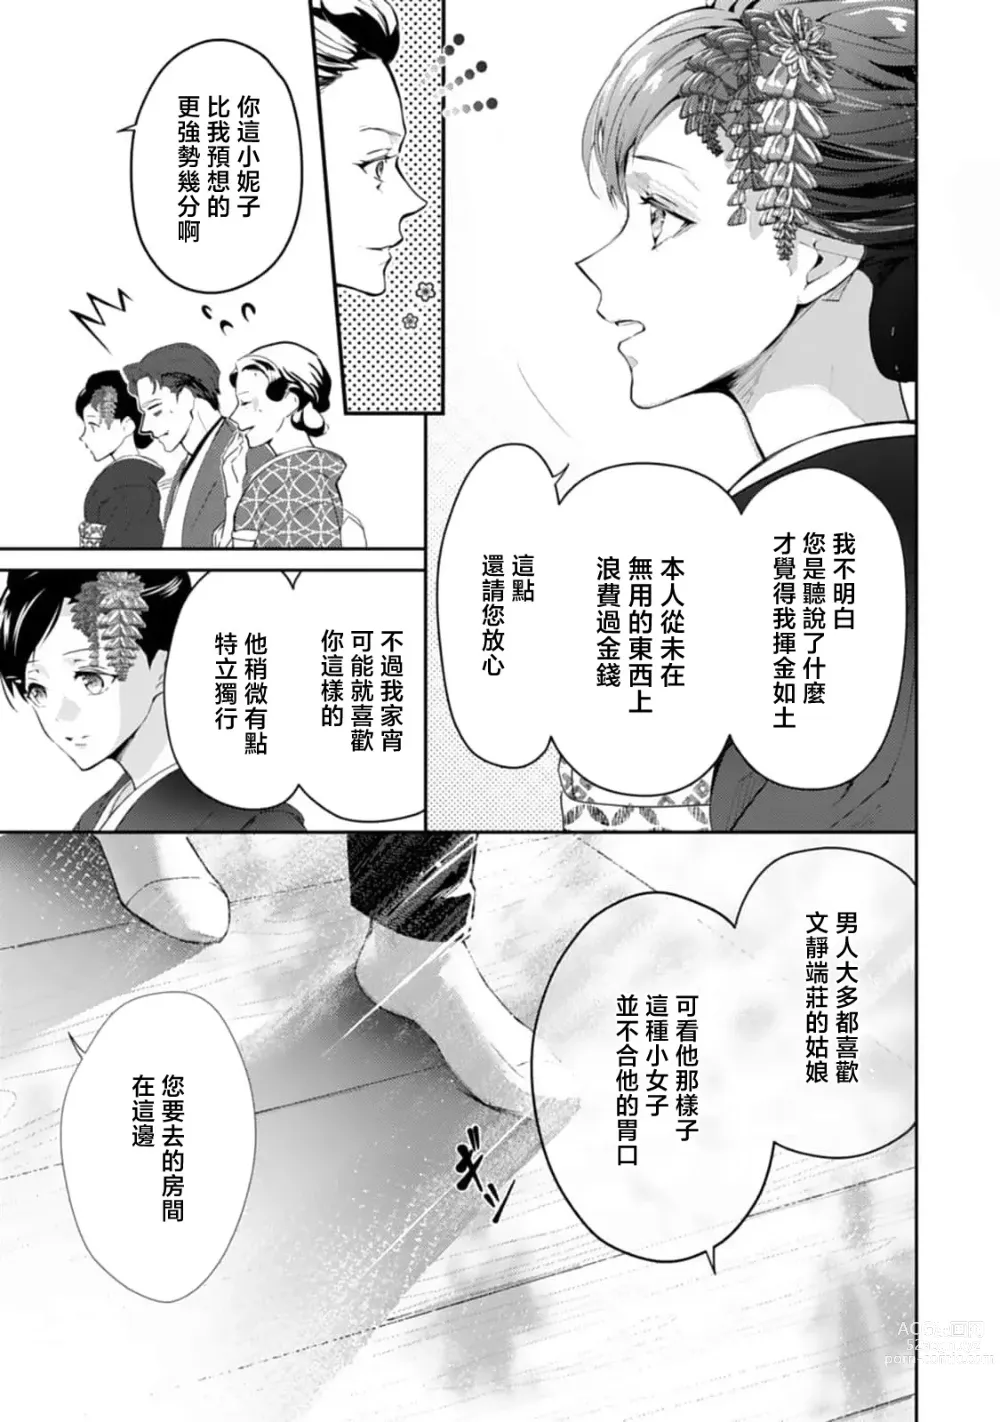 Page 8 of manga 怀旧浪漫谭•替身新娘嫁对制服郎